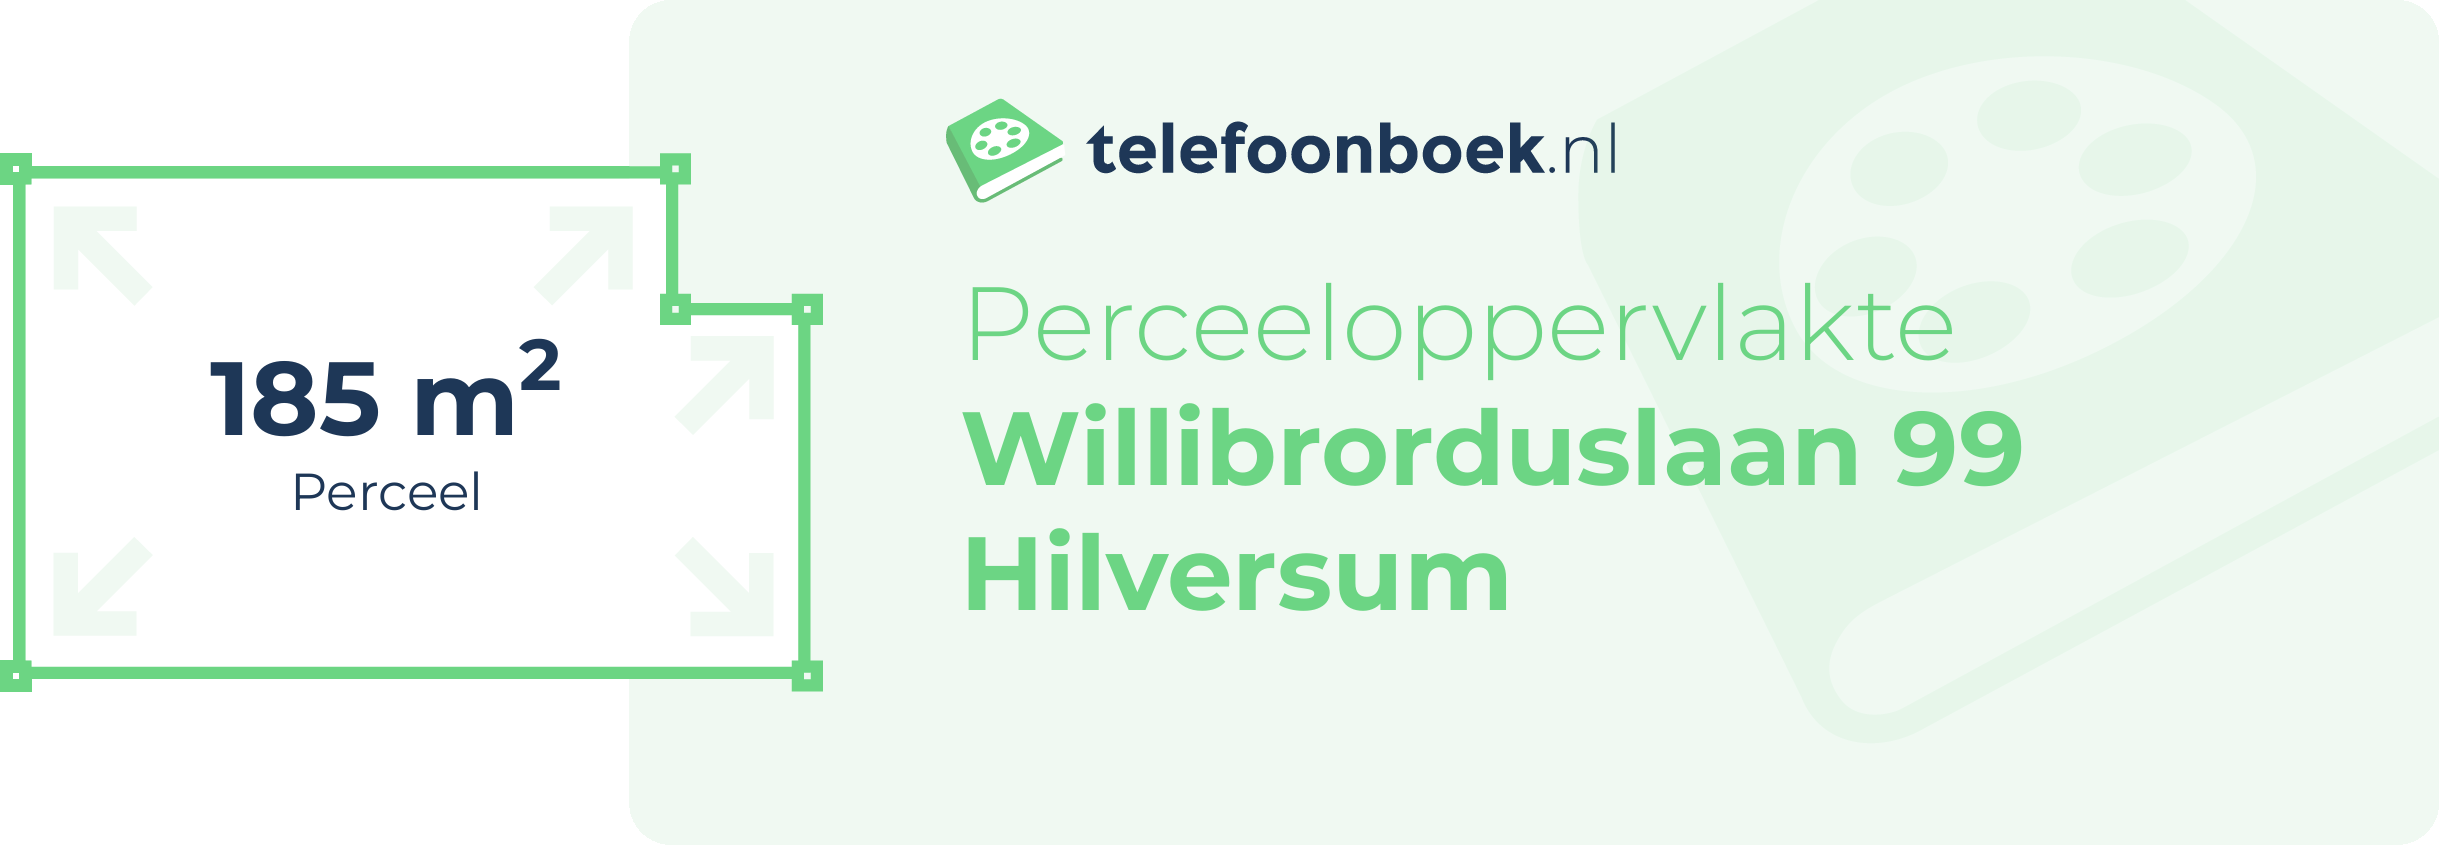 Perceeloppervlakte Willibrorduslaan 99 Hilversum